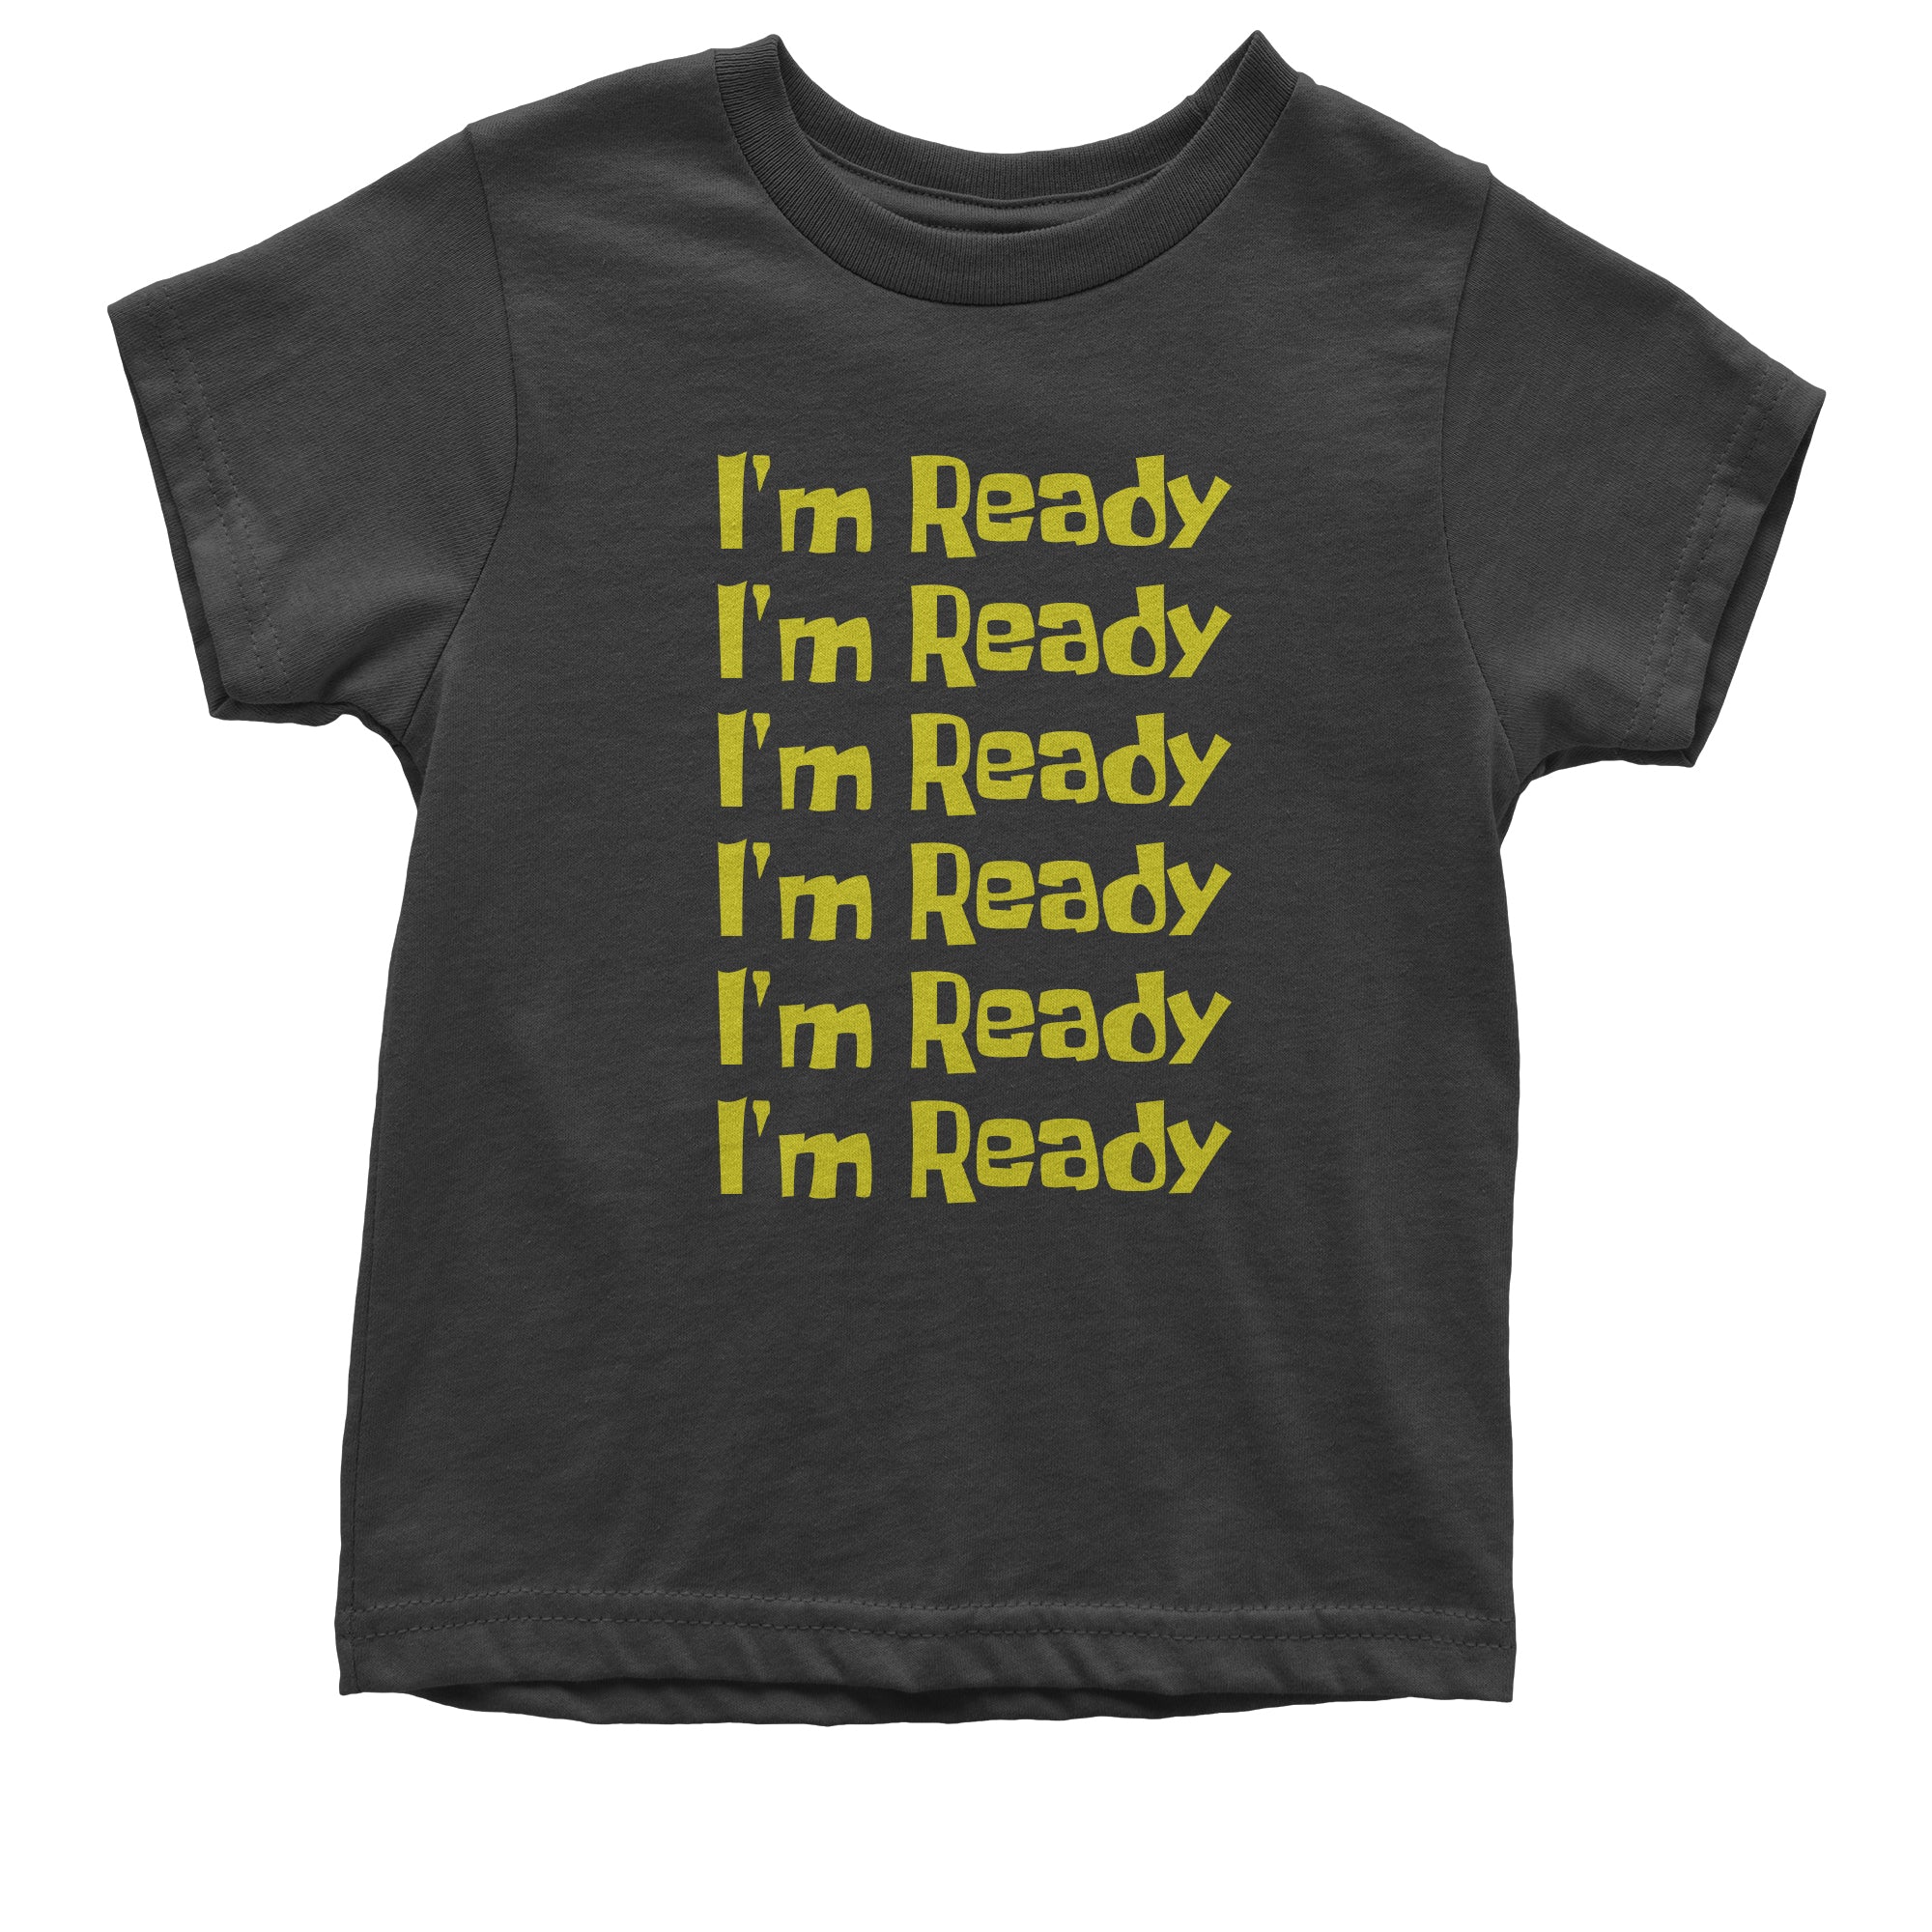 I'm Ready Funny Quote Catchphrase Spongebobble Kid's T-Shirt